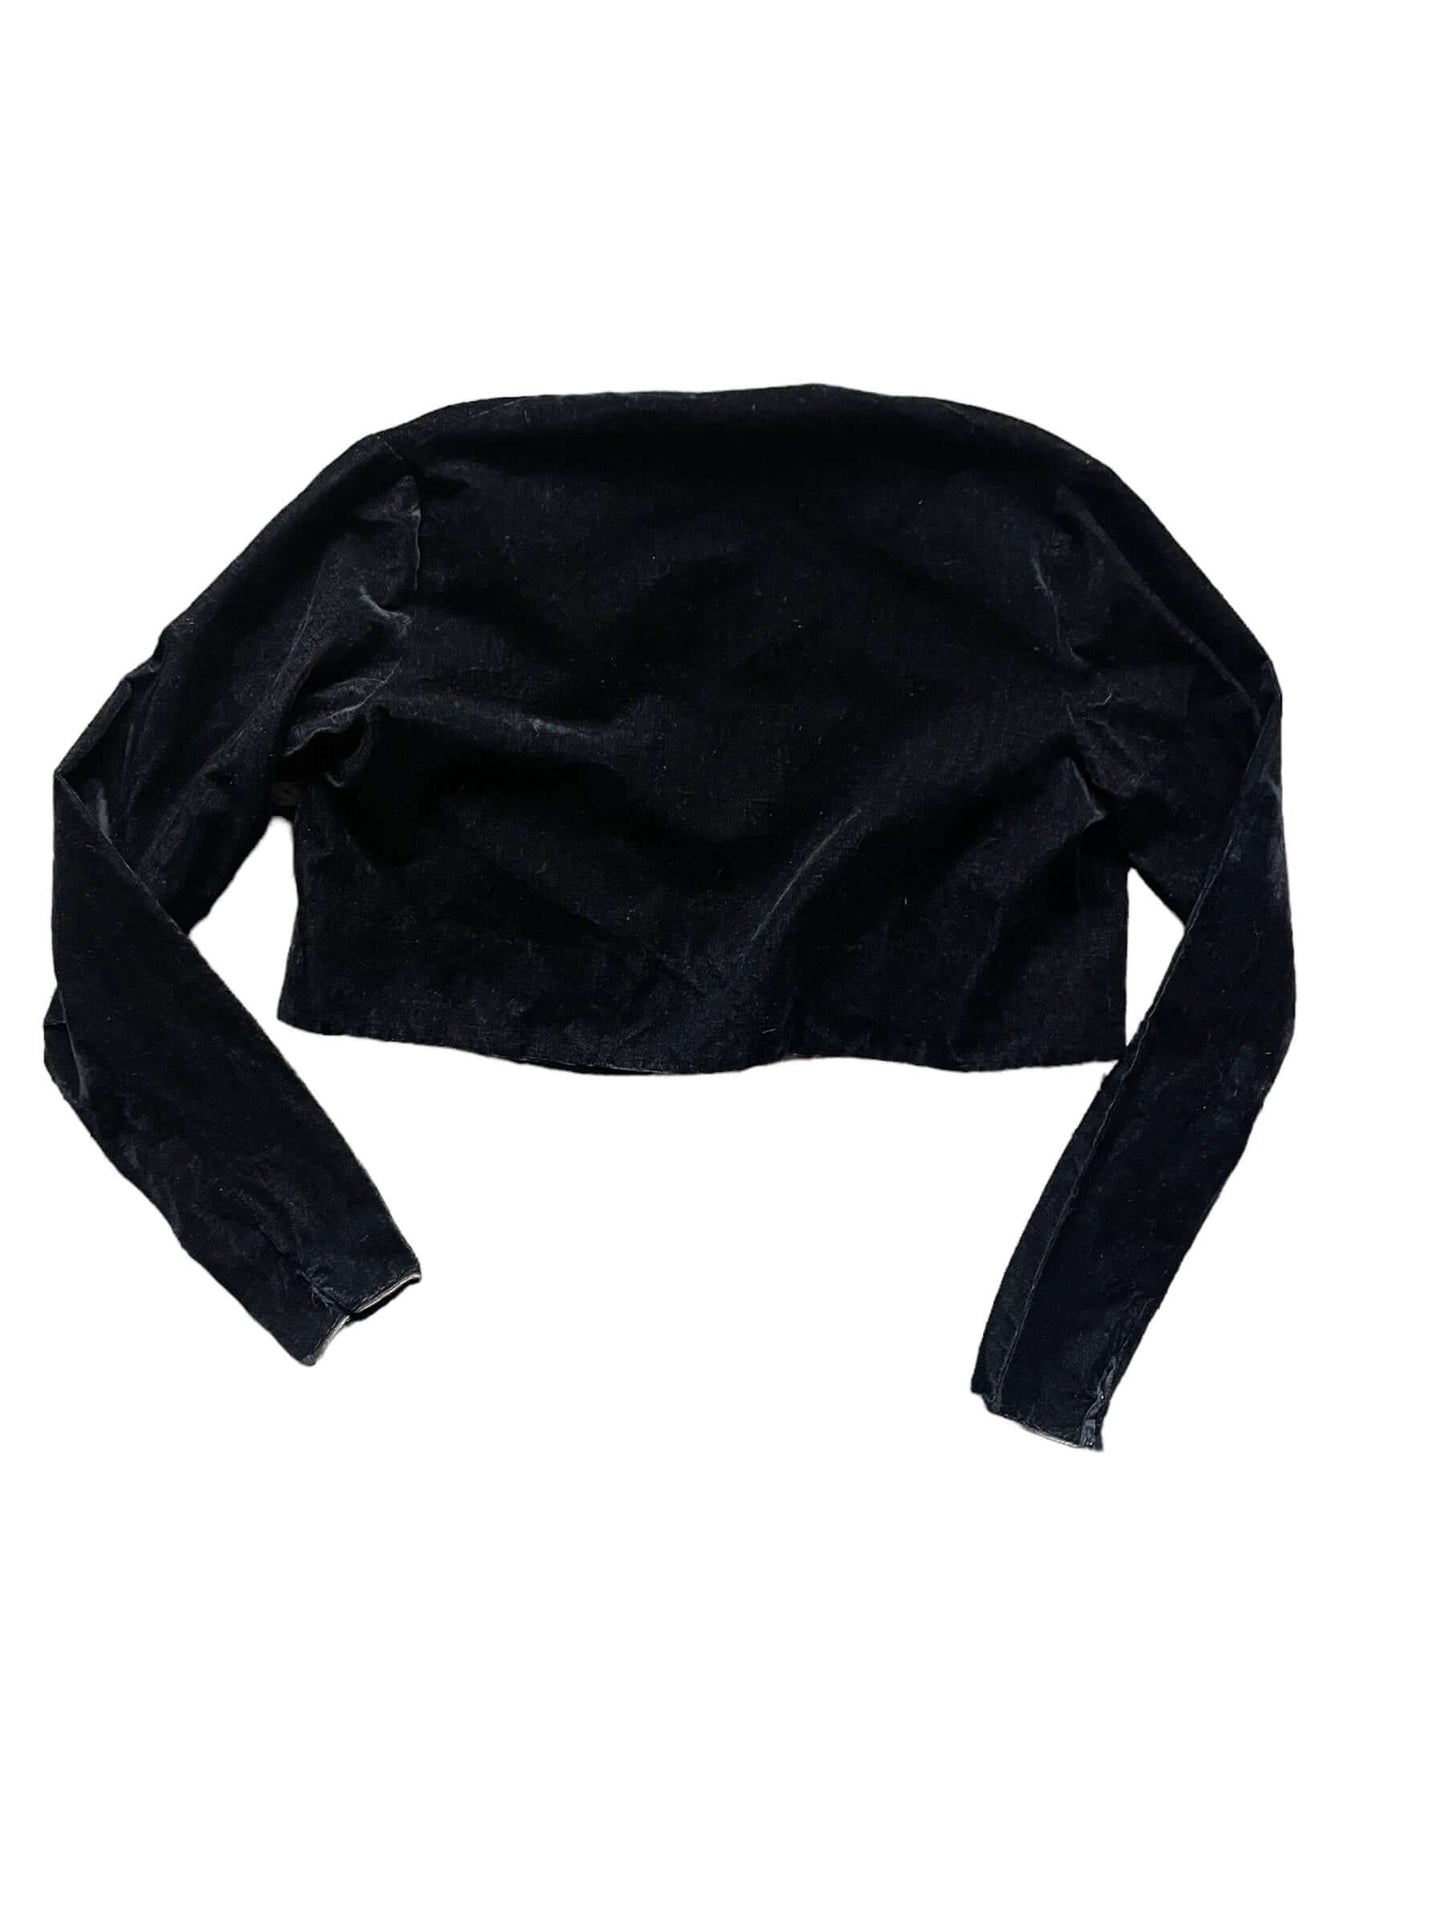 Full back view of Vintage 1940s-50s Black Velvet Cropped Jacket | Vintage Ladies Clothing | Barn Owl True Vintage